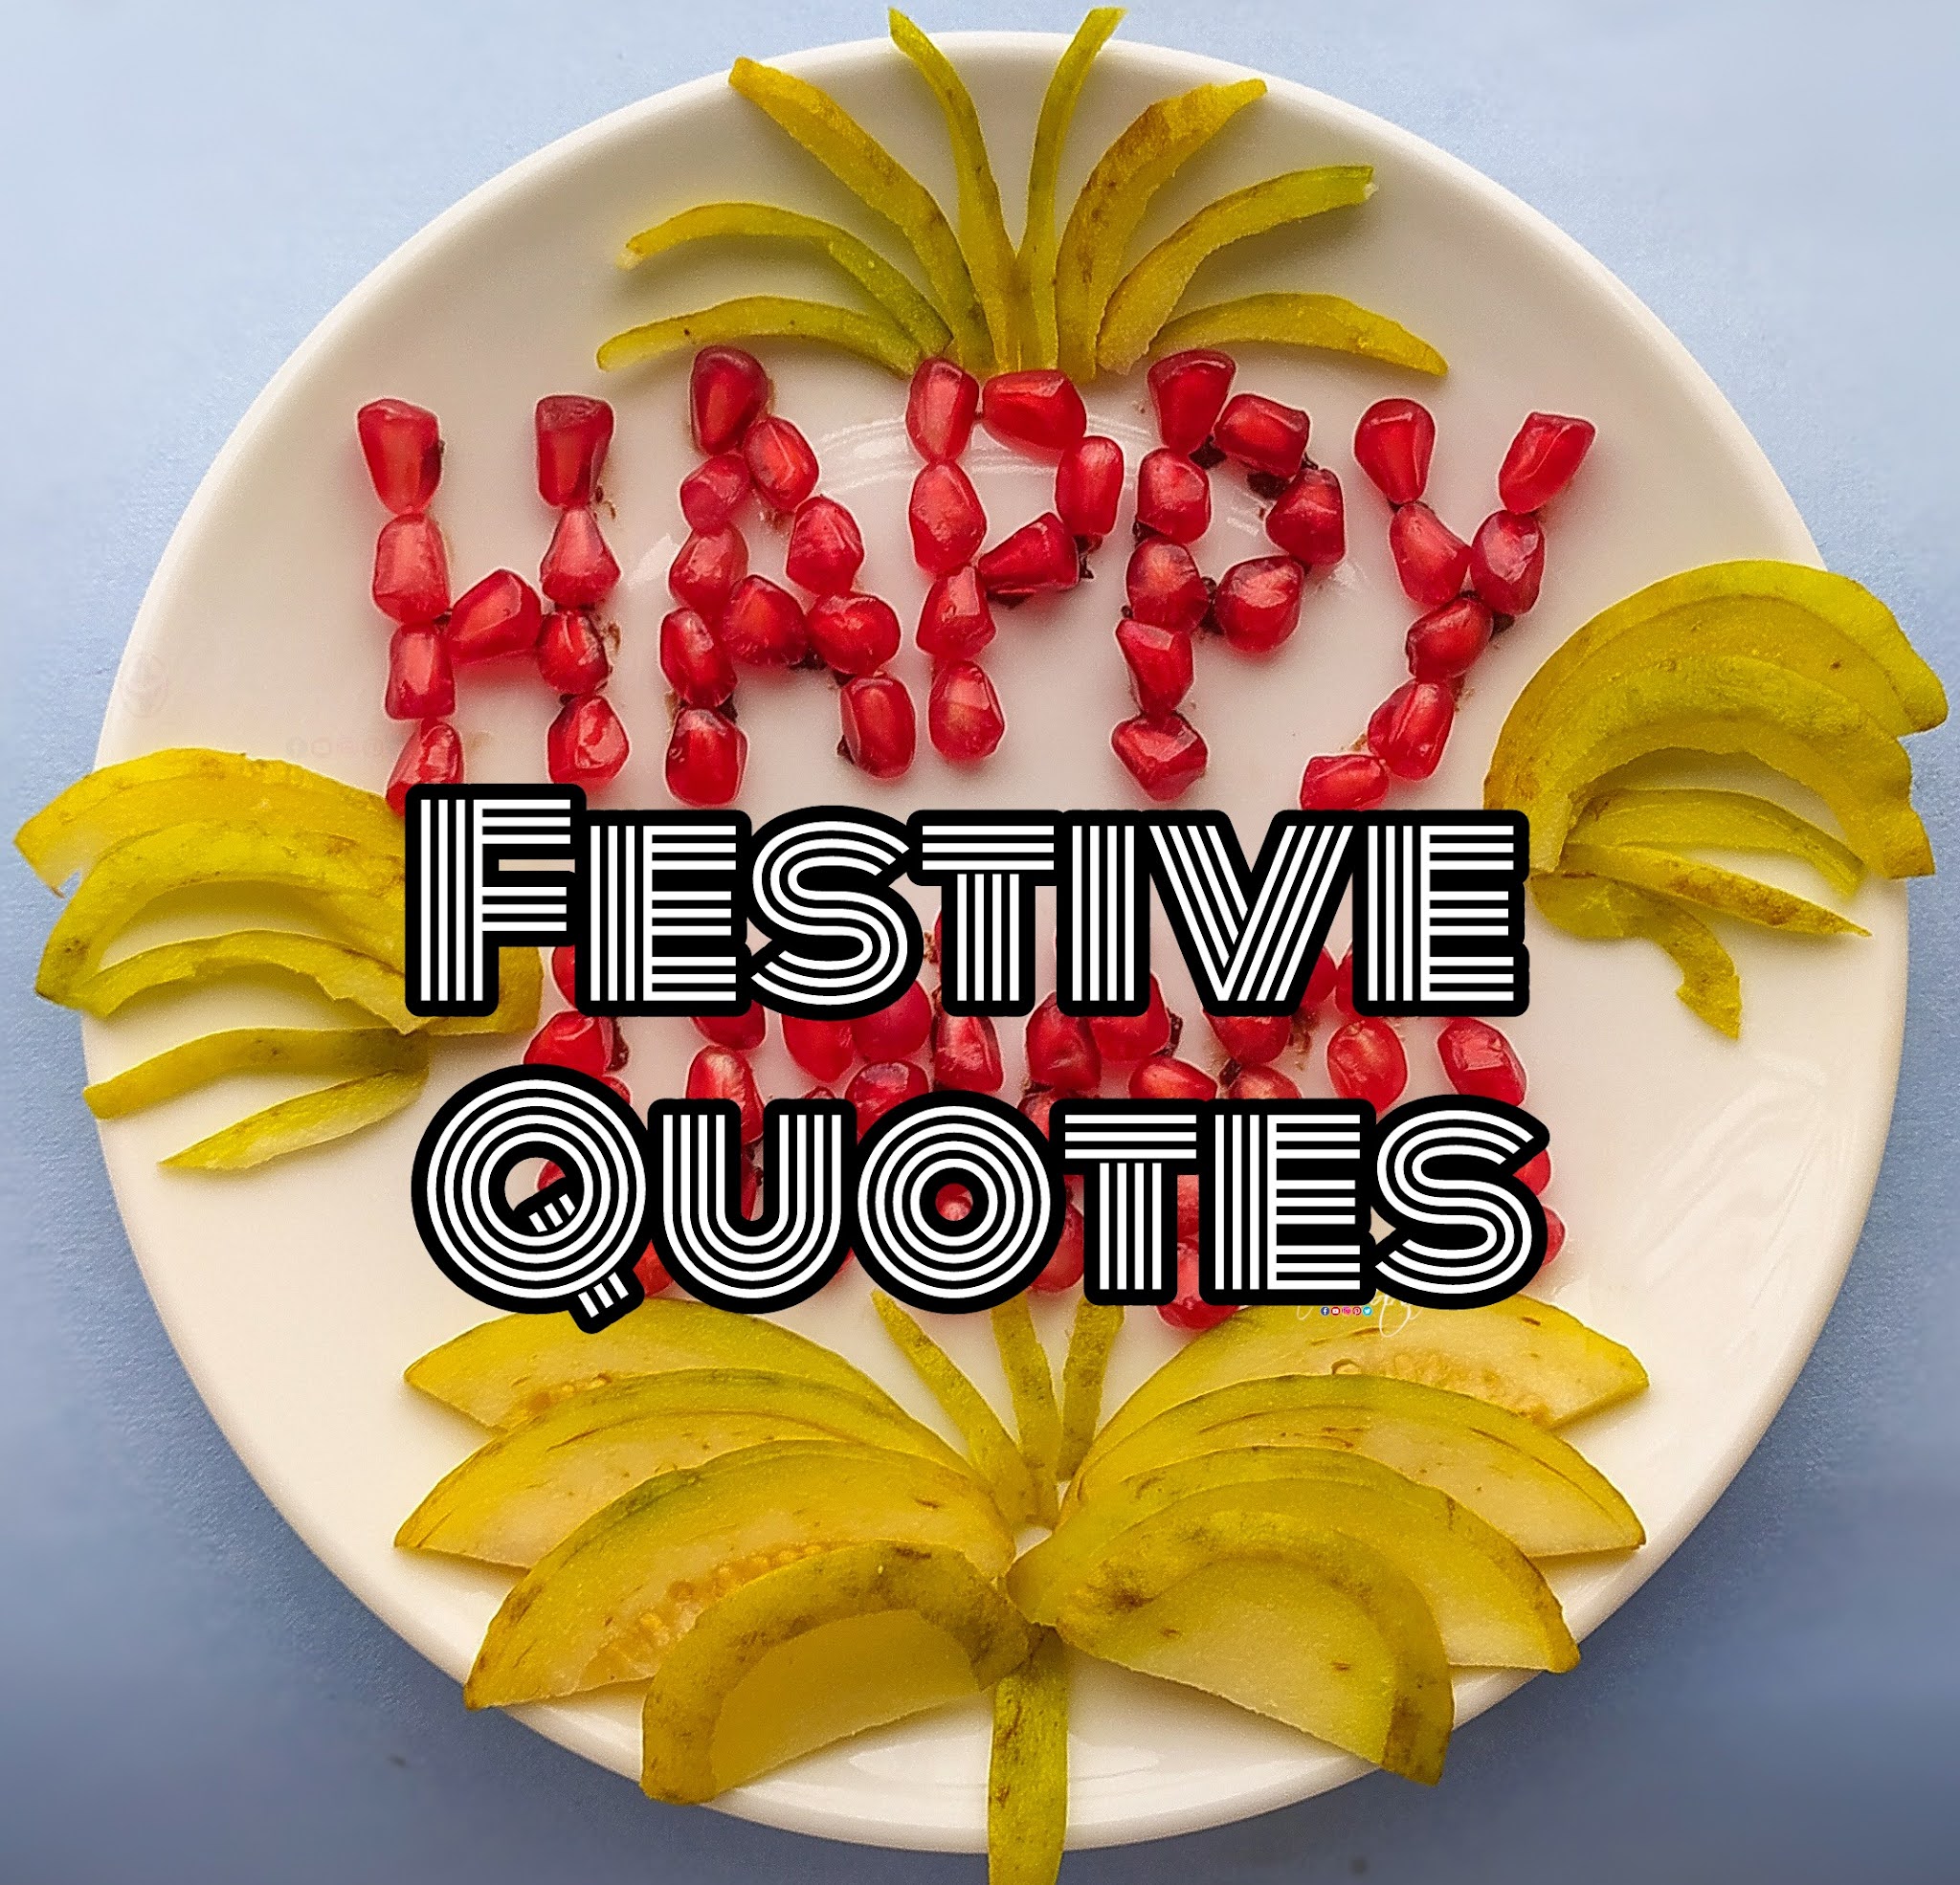 Festive Quotes